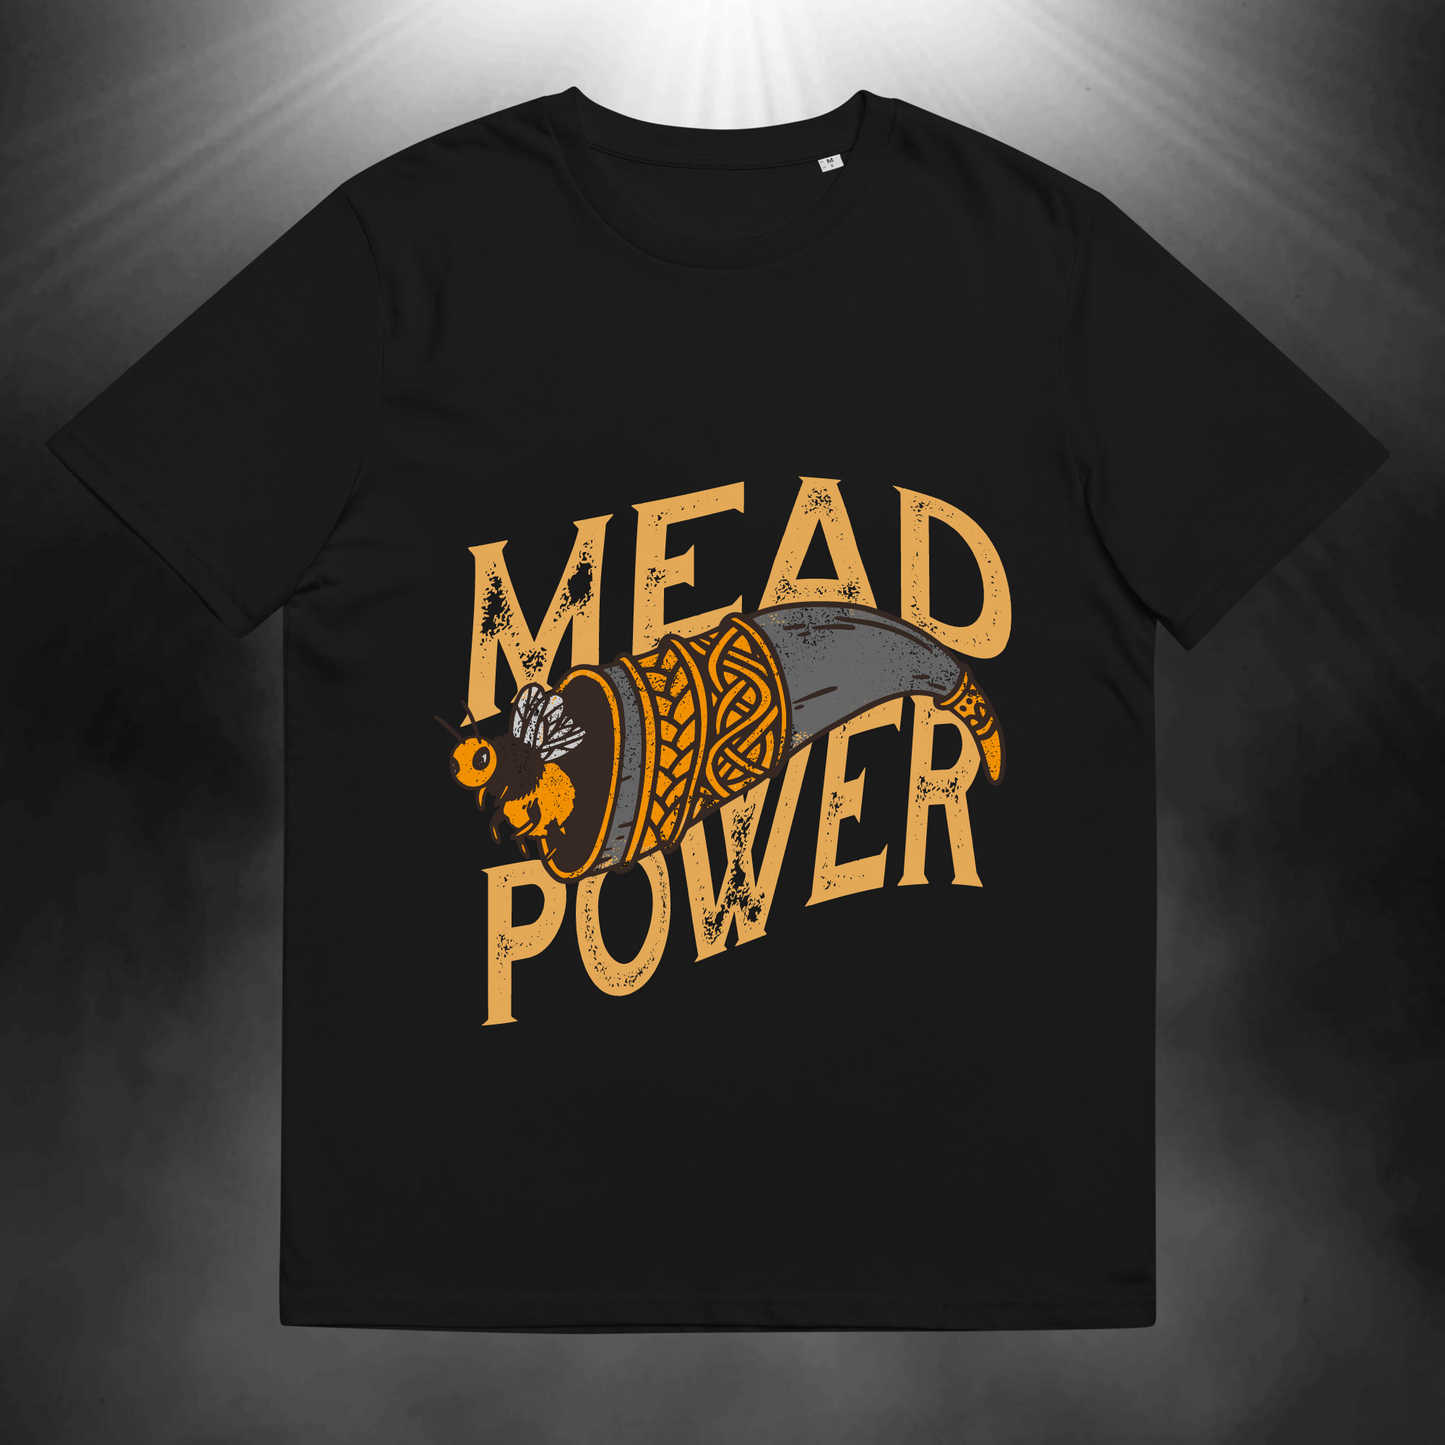 Meadpower